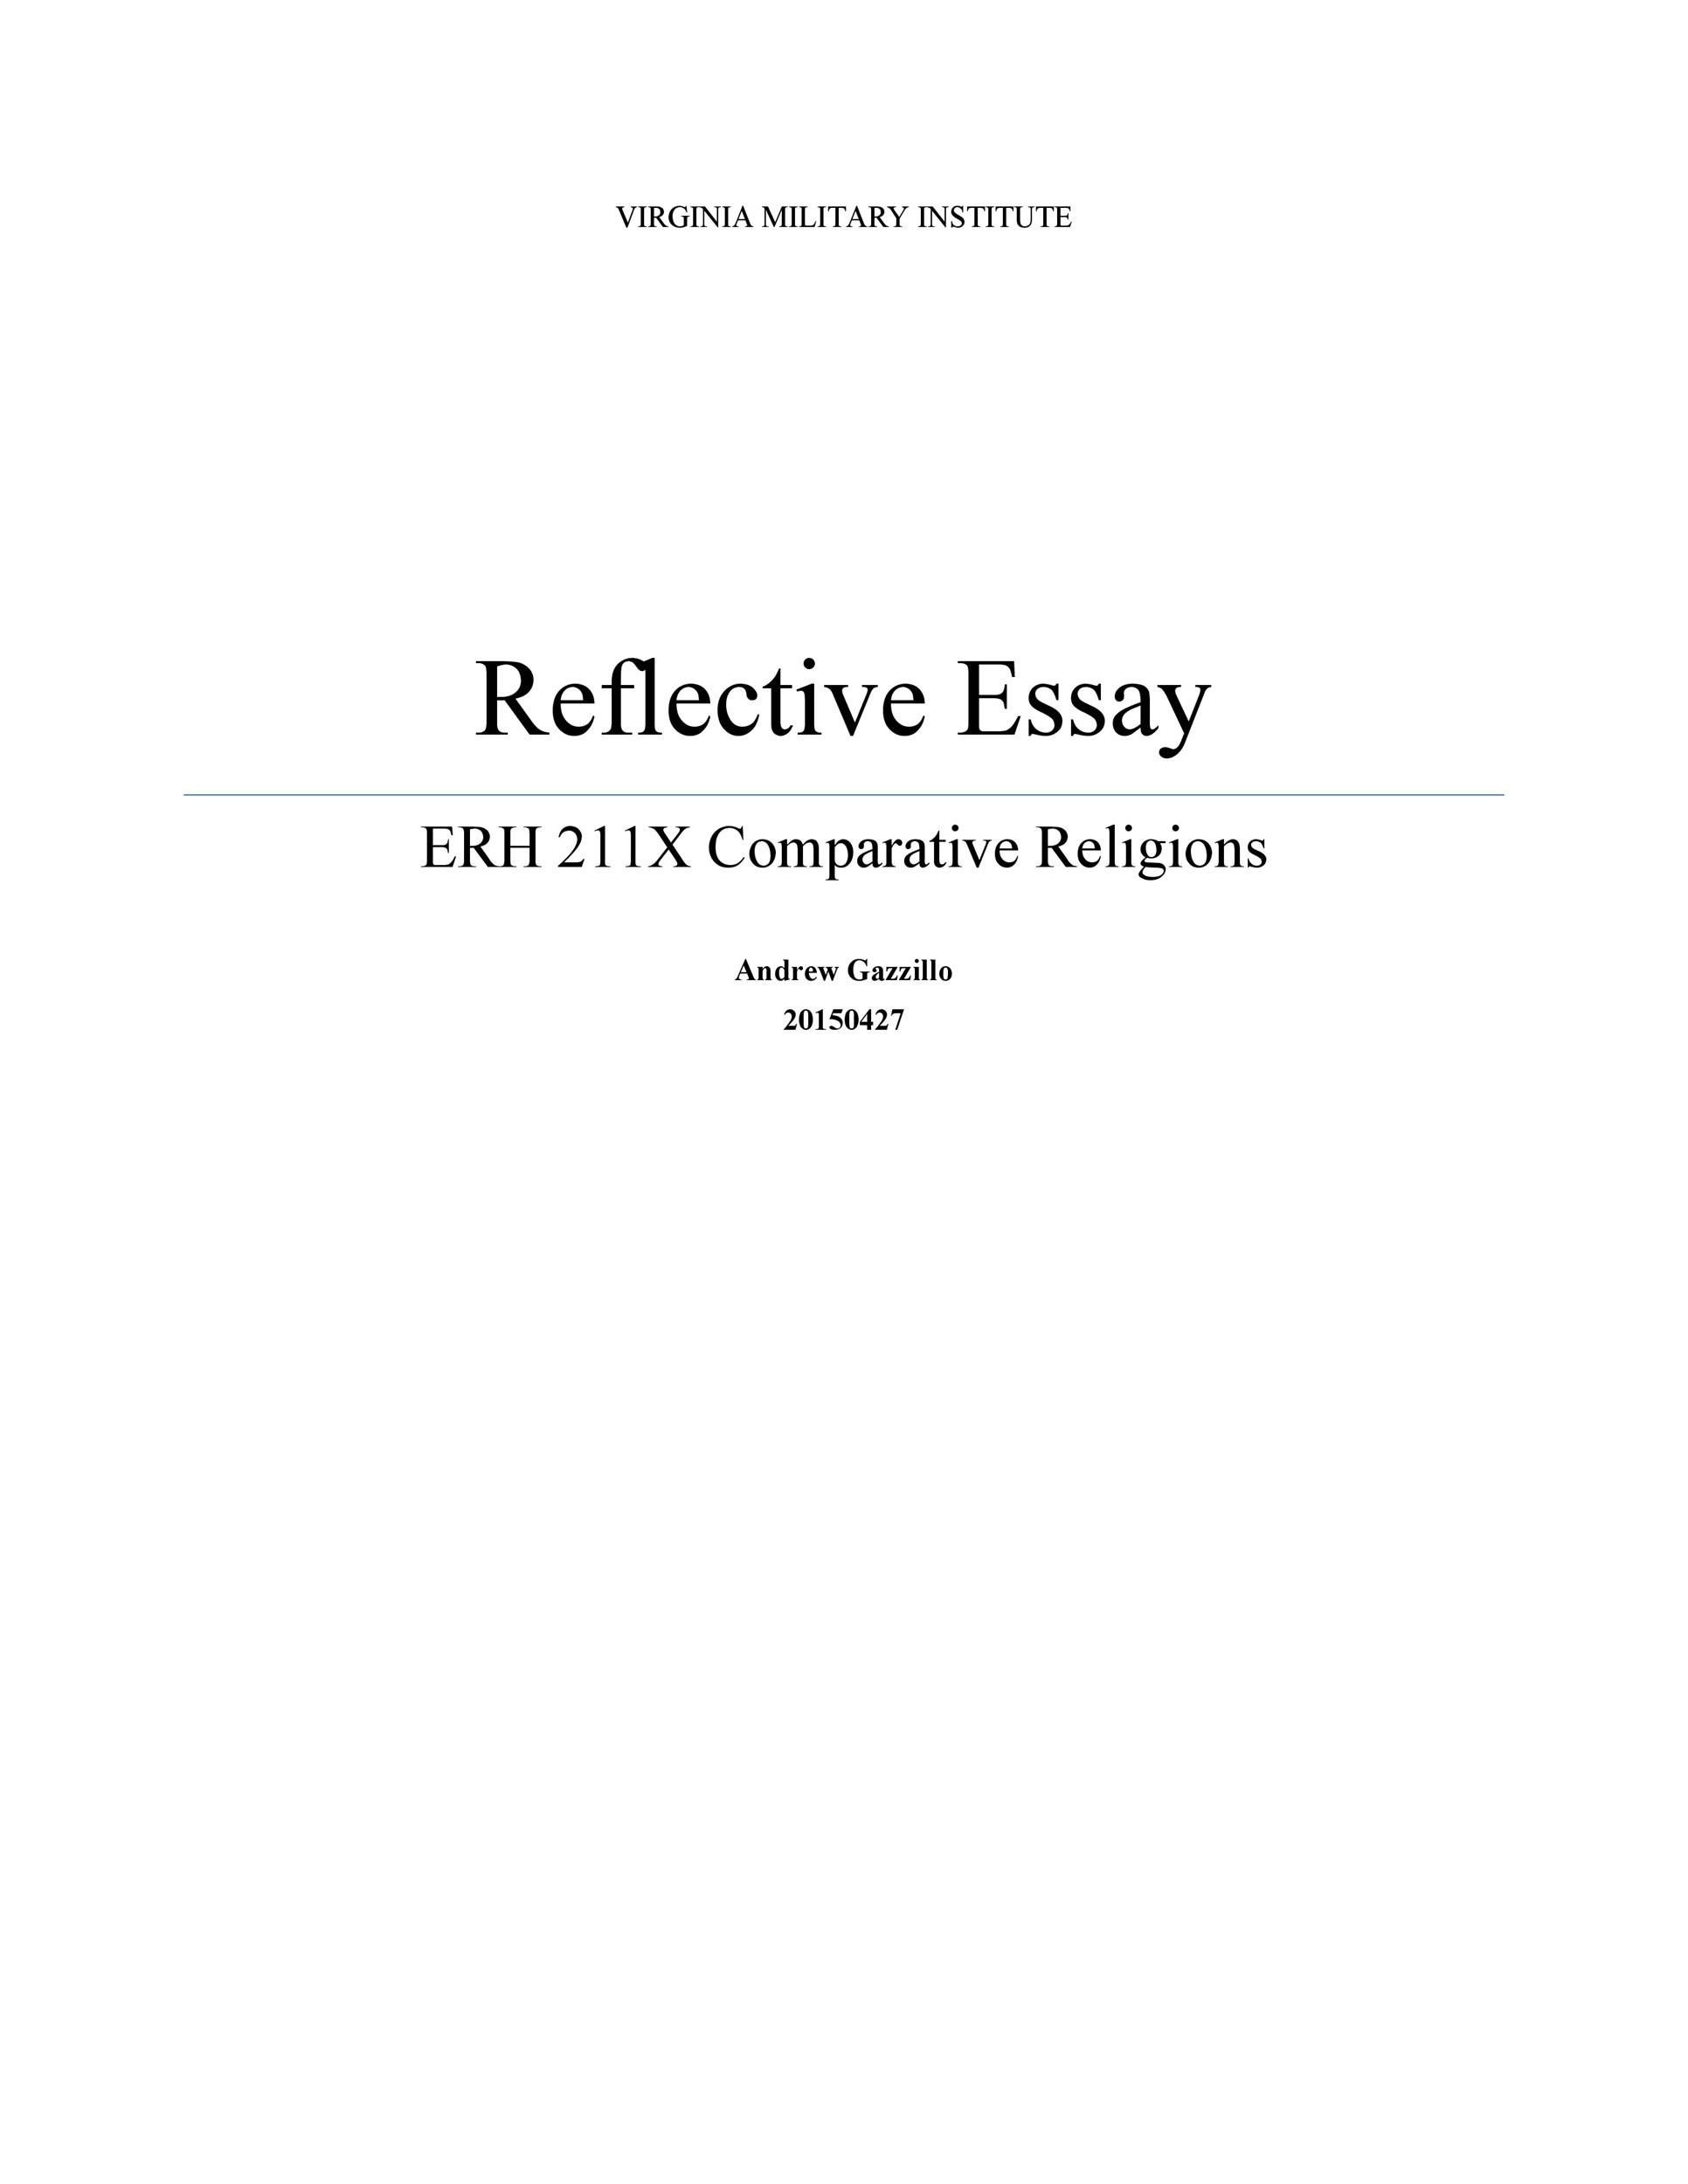 Free reflective essay example 05